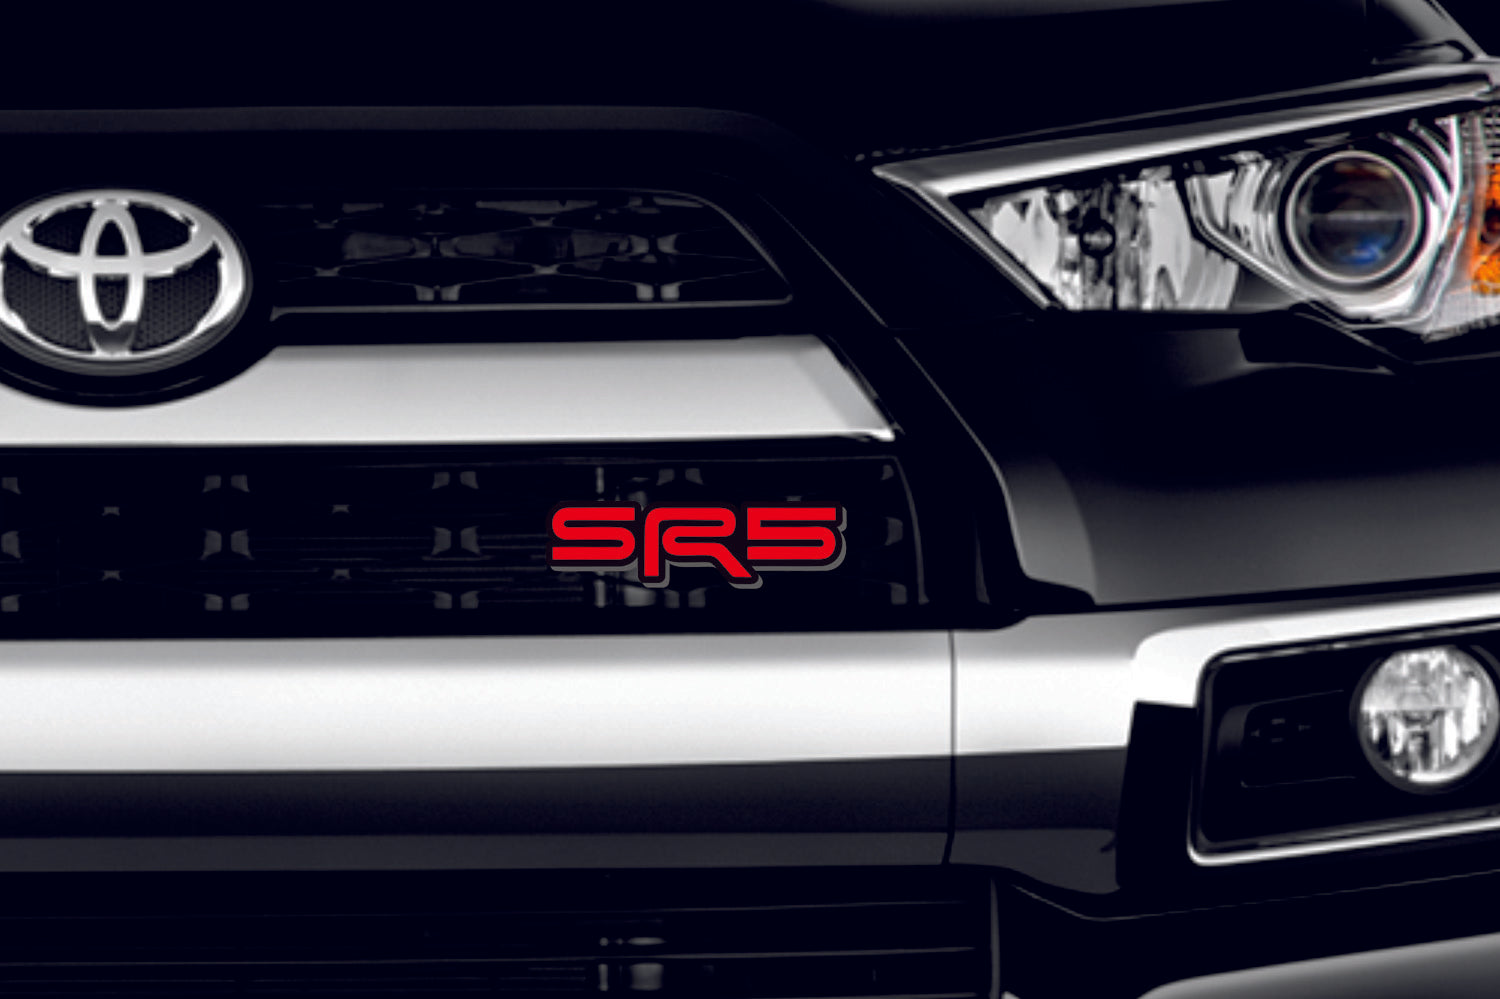 Toyota Radiator grille emblem with SR5 logo - decoinfabric